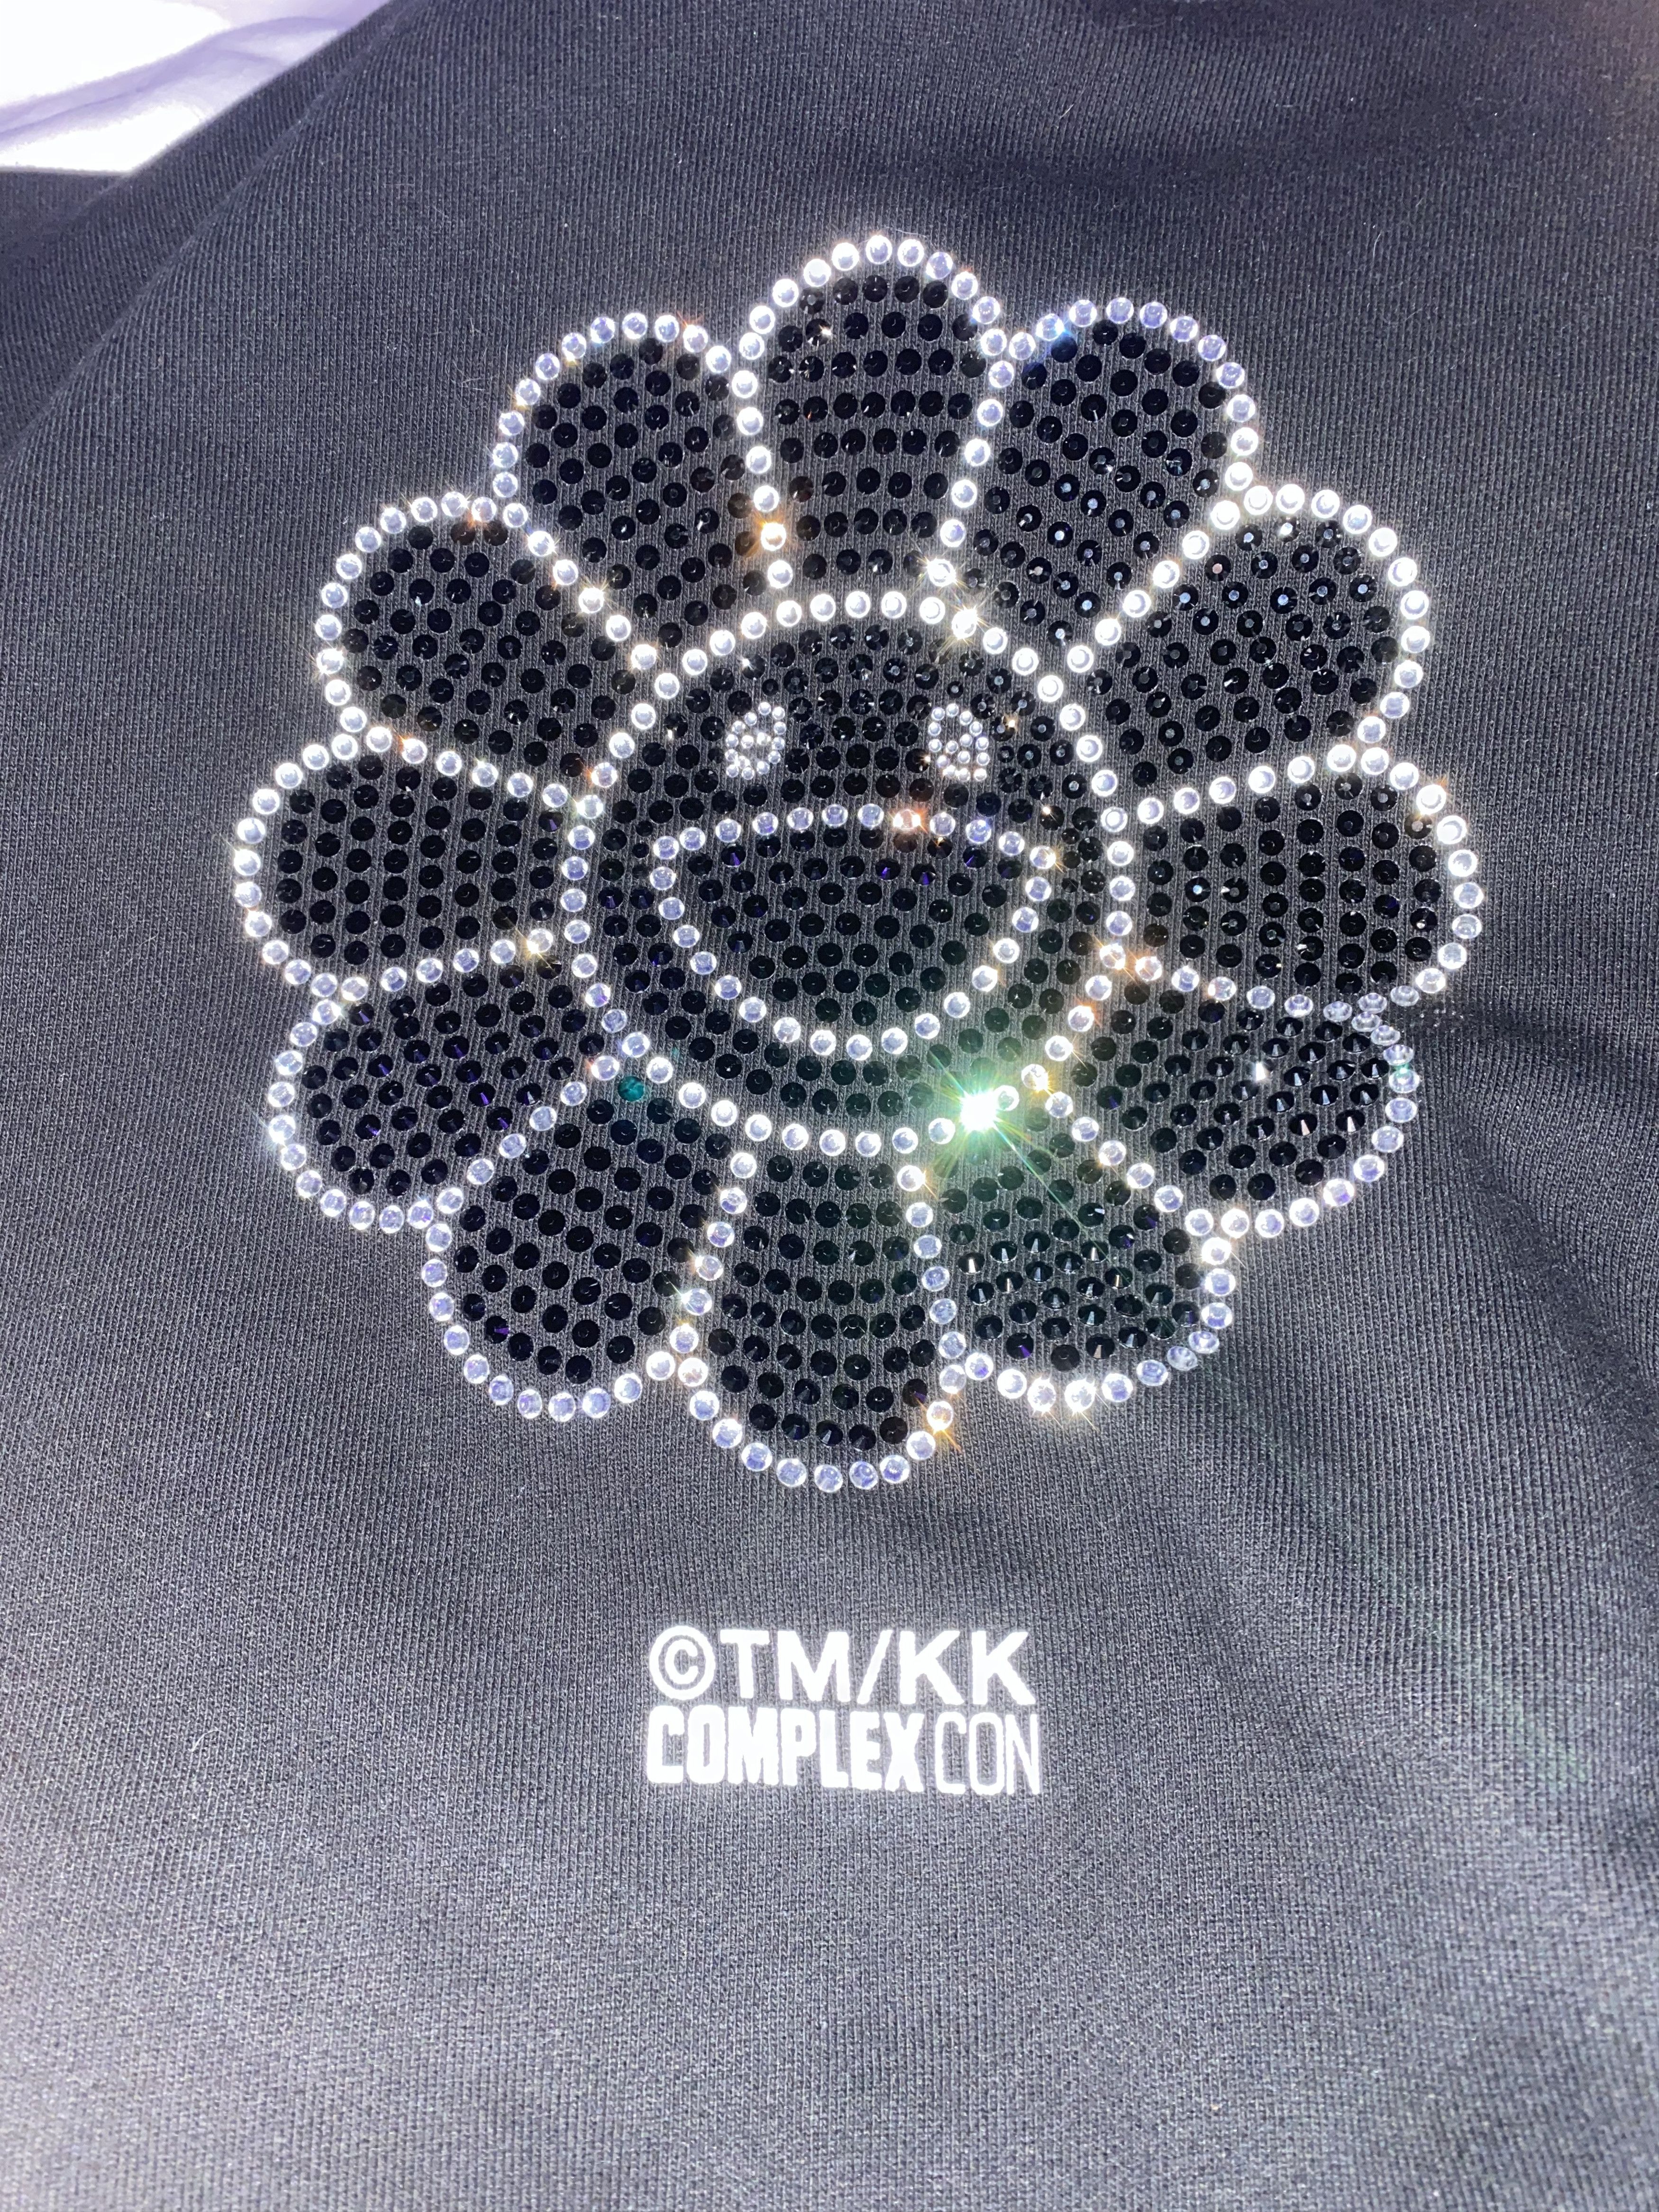 Takashi Murakami Complexcon Swarovski Crystal Flower Hoodie Black